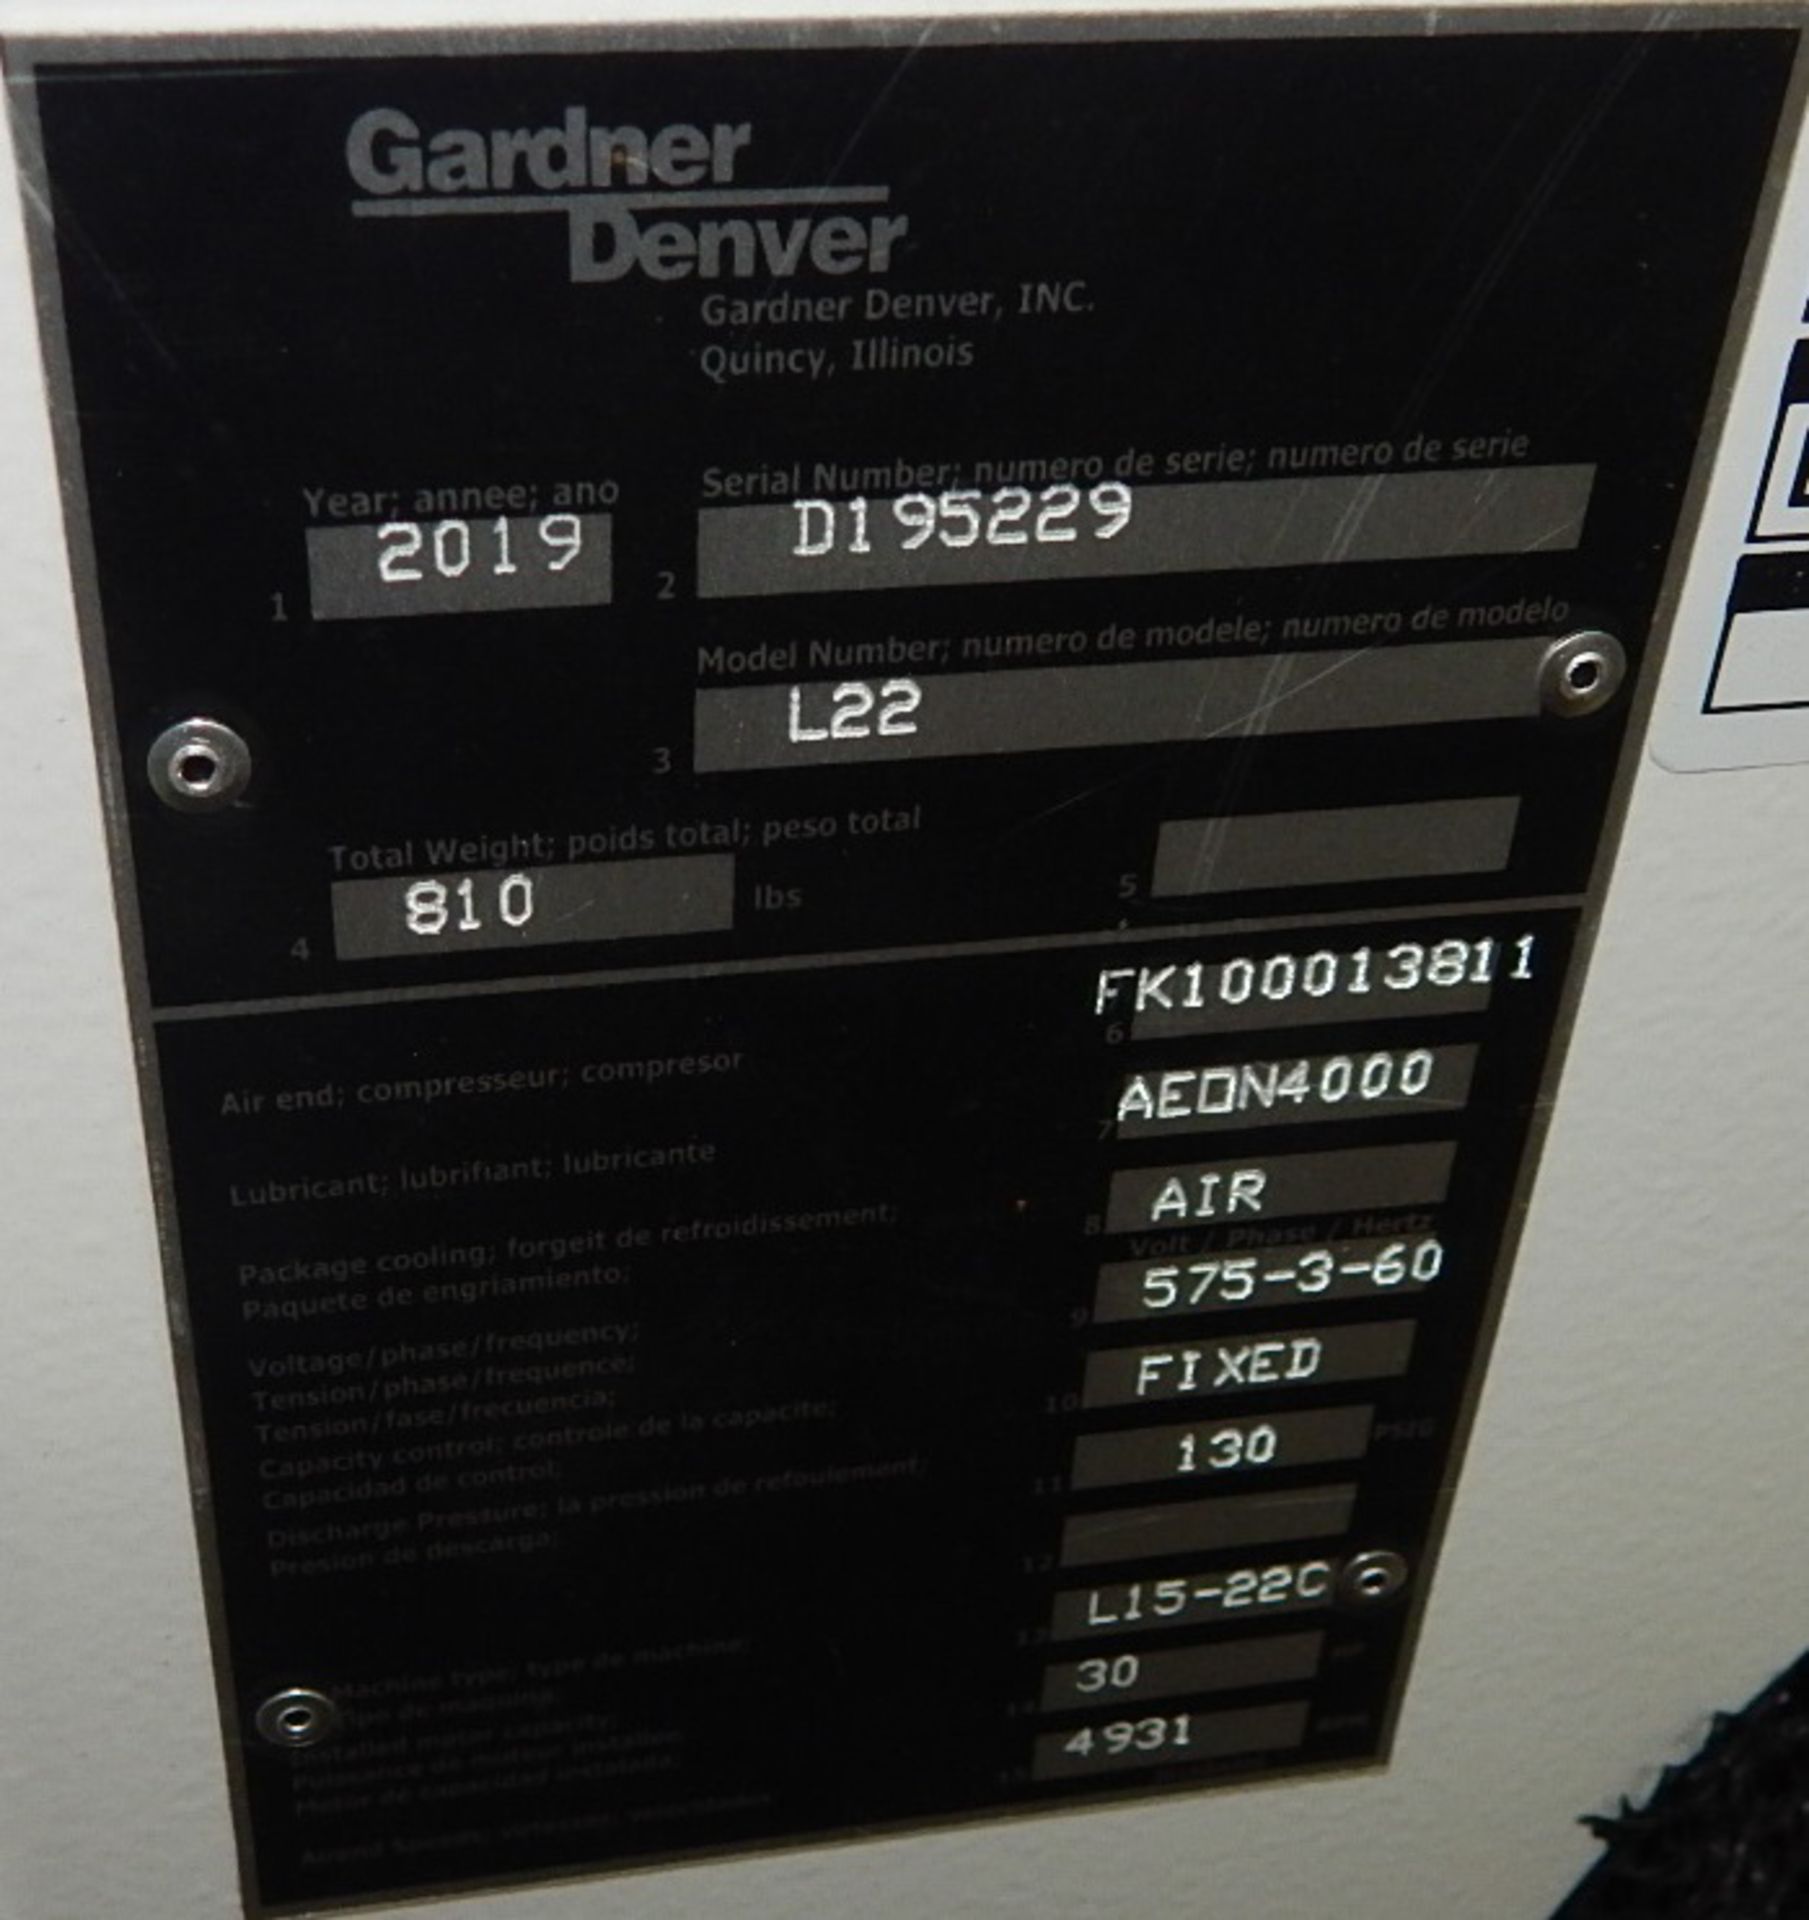 GARDNER DENVER (2019) L22 ROTARY SCREW AIR COMPRESSOR WITH 30 HP, 130 PSI, S/N: D195229 (CI) [SKU - Image 4 of 4